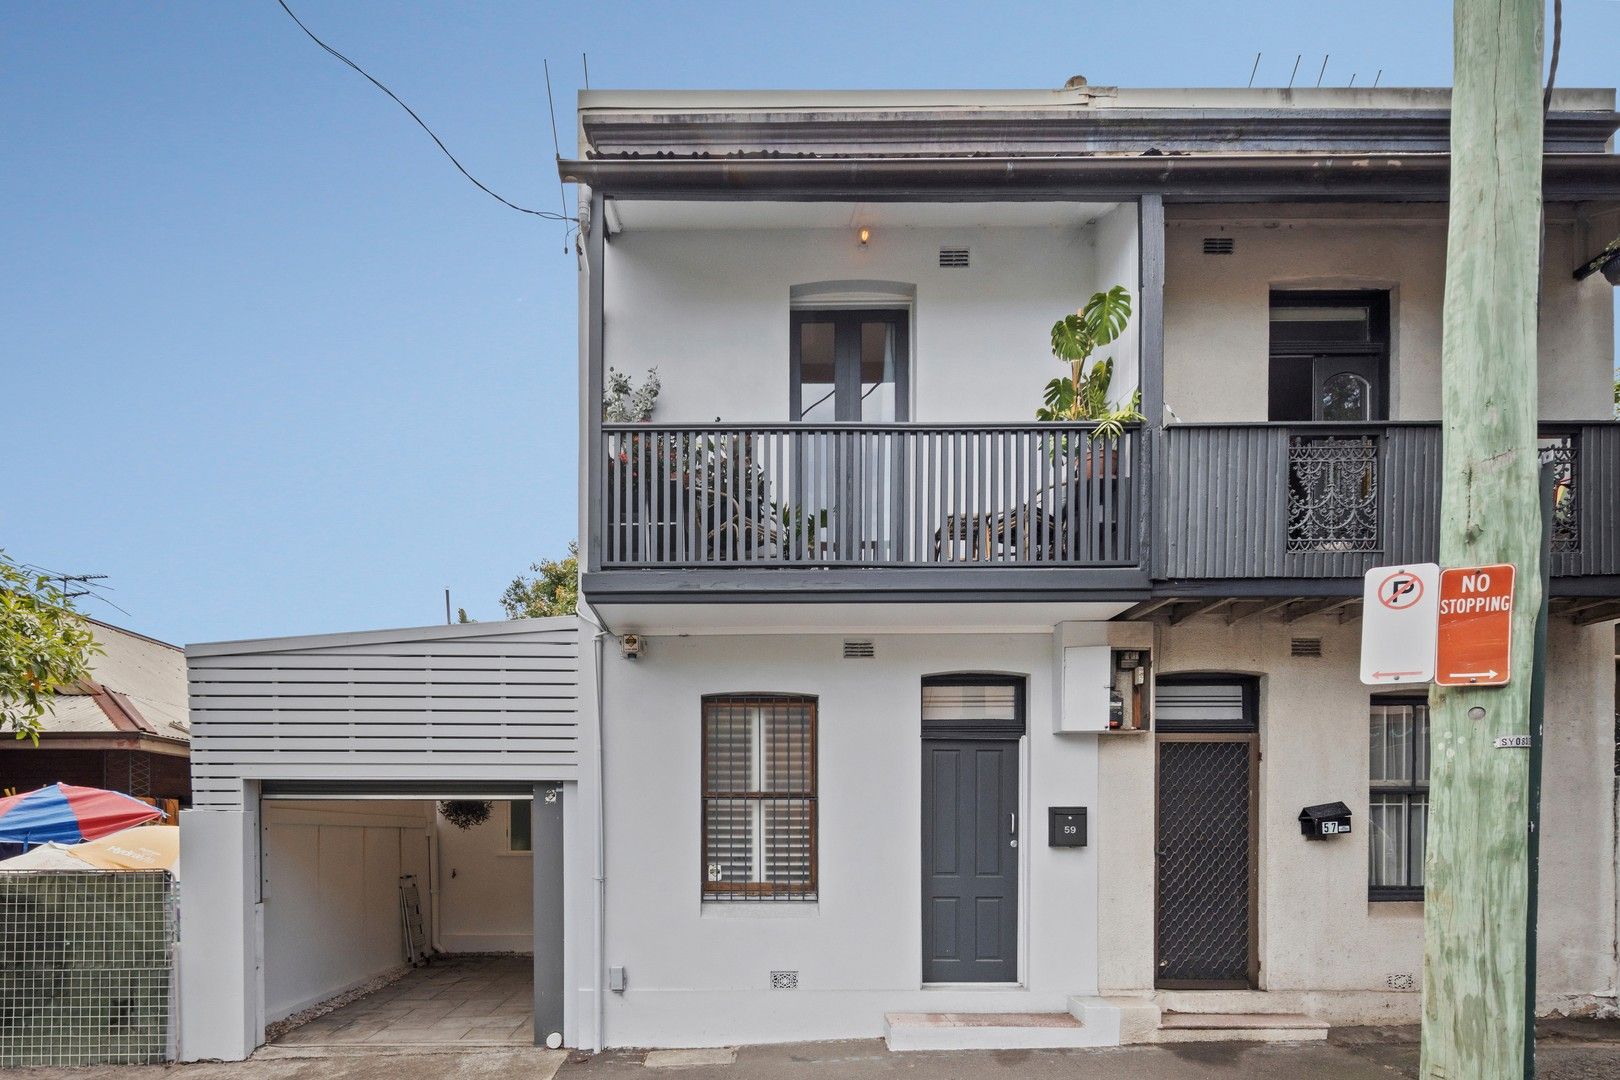 2 bedrooms House in 59 Wyndham Street ALEXANDRIA NSW, 2015